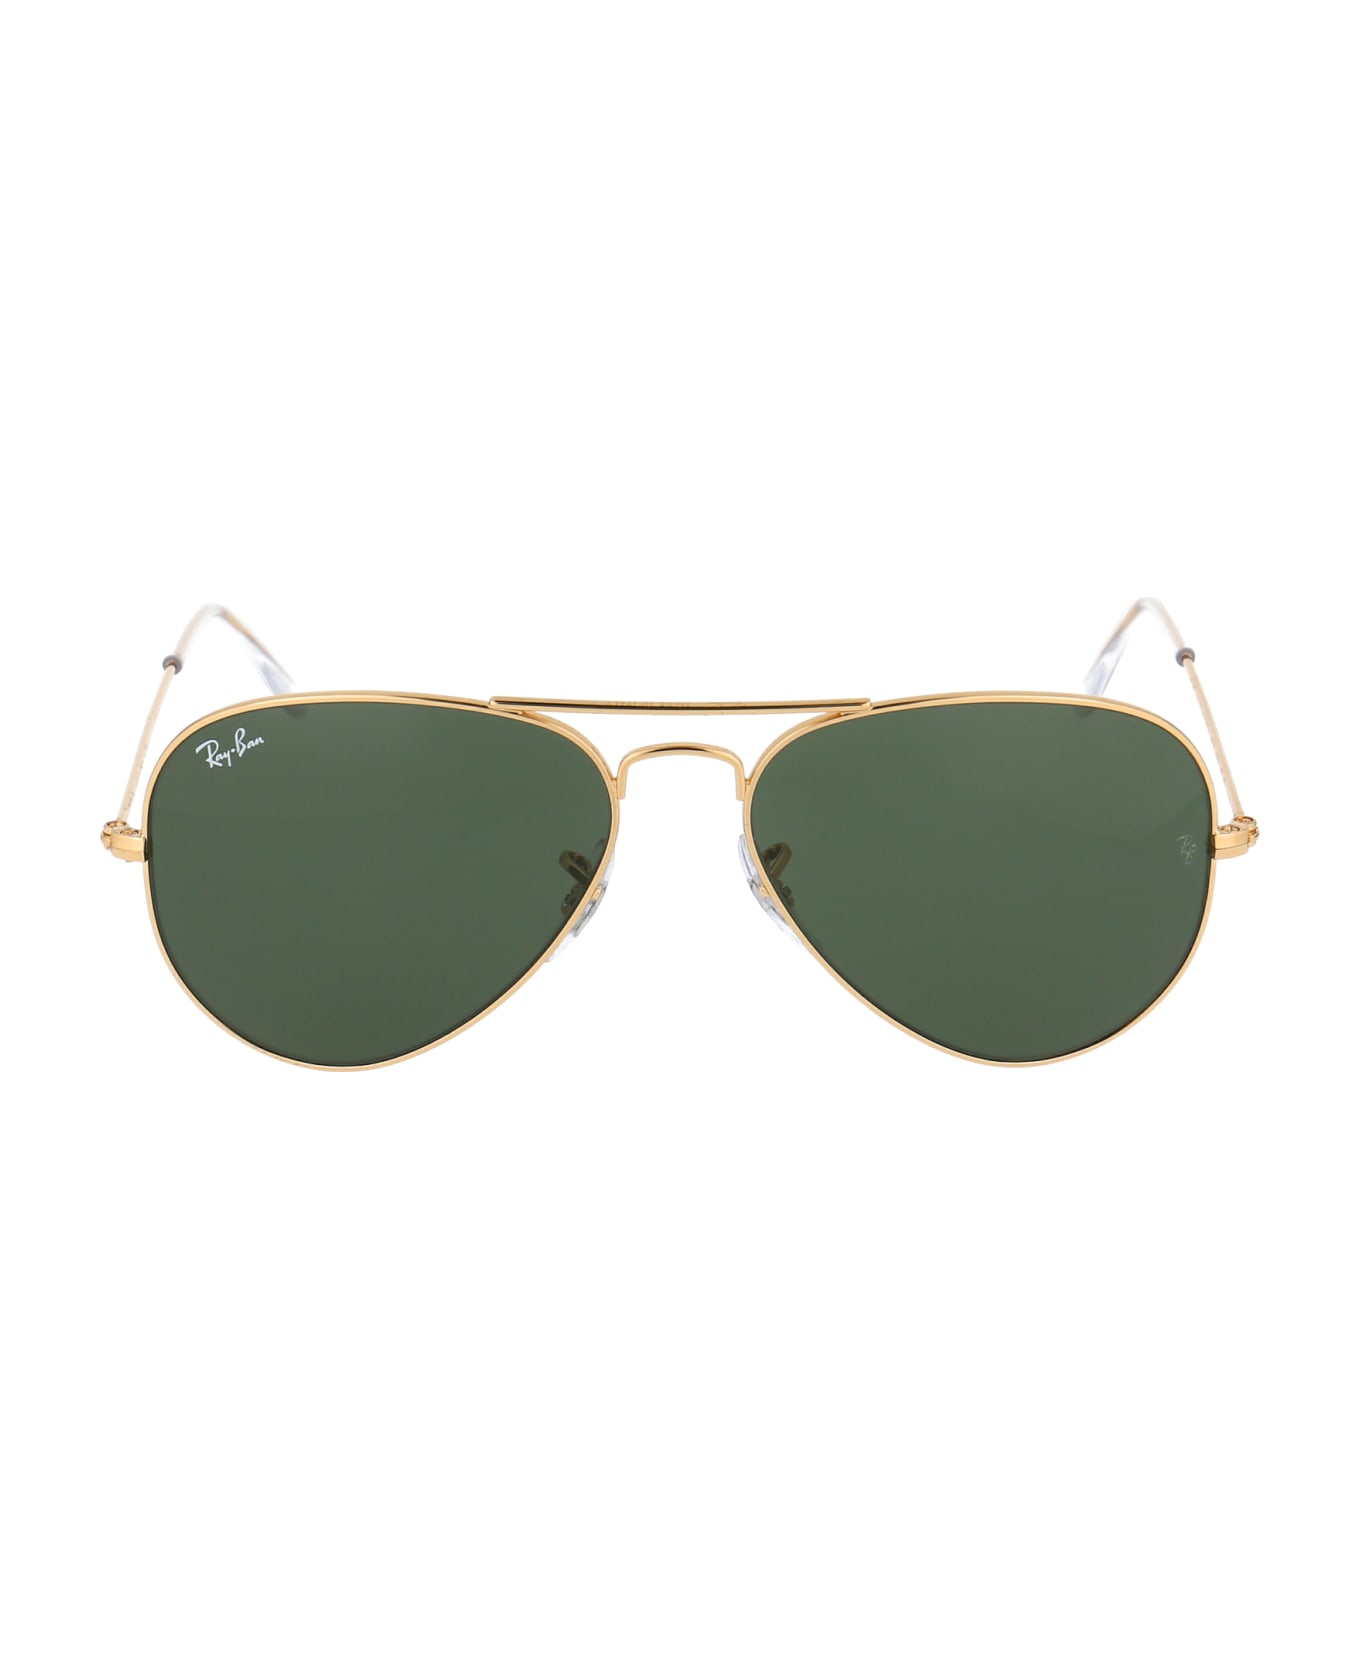 Ray-Ban Aviator Sunglasses - W3234 GOLD